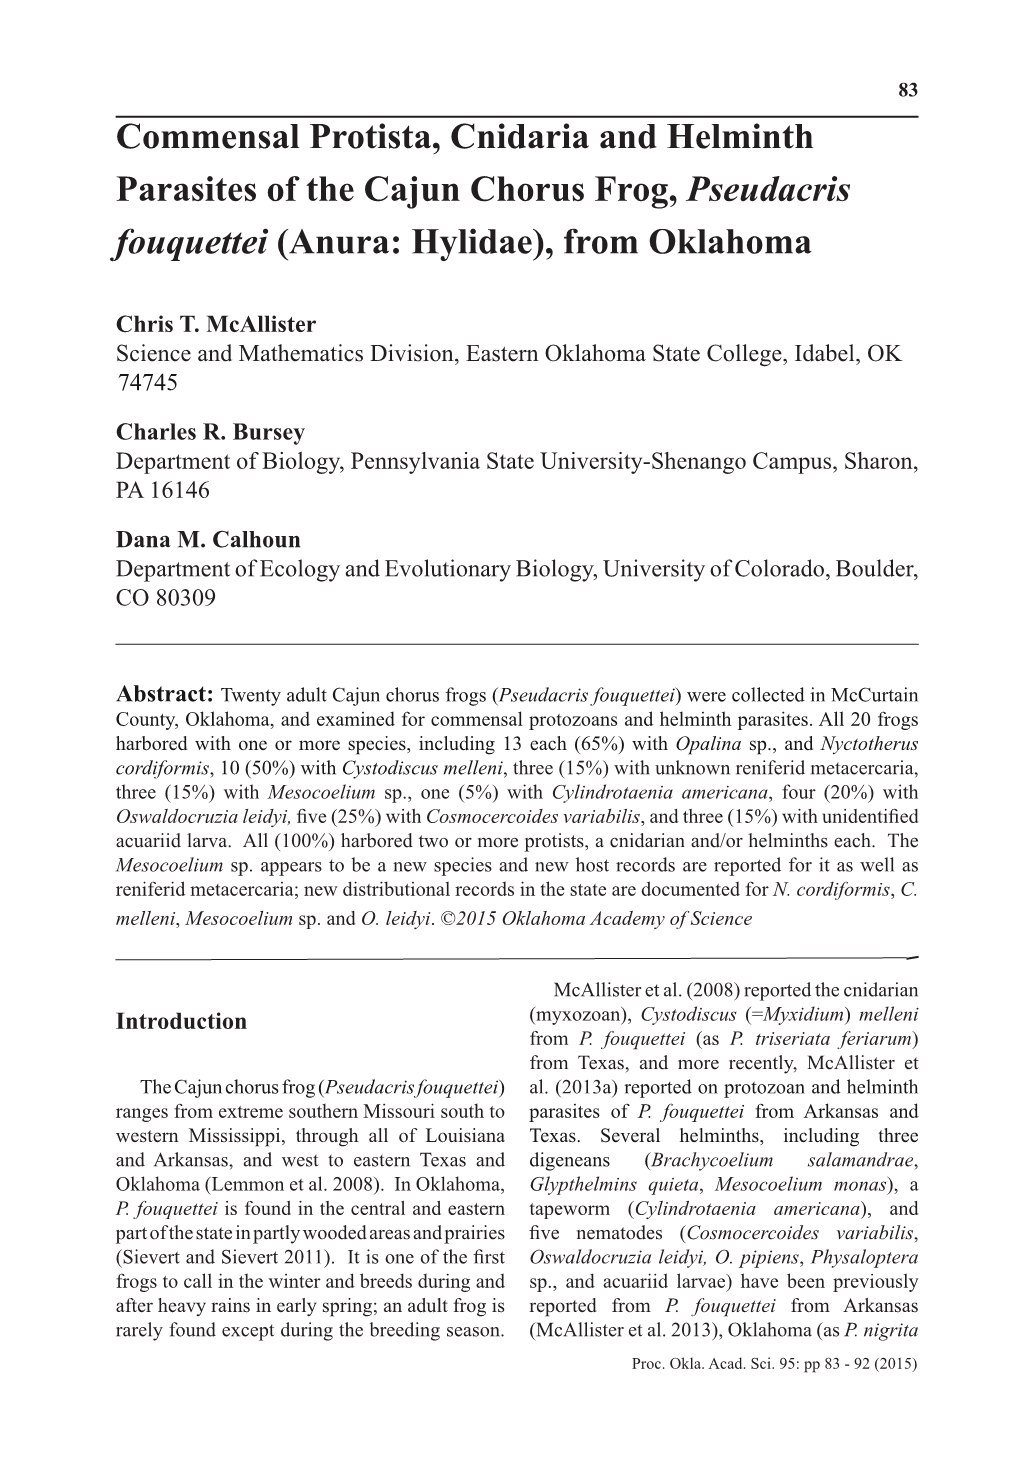 Commensal Protista, Cnidaria and Helminth Parasites of the Cajun Chorus Frog, Pseudacris Fouquettei (Anura: Hylidae), from Oklahoma